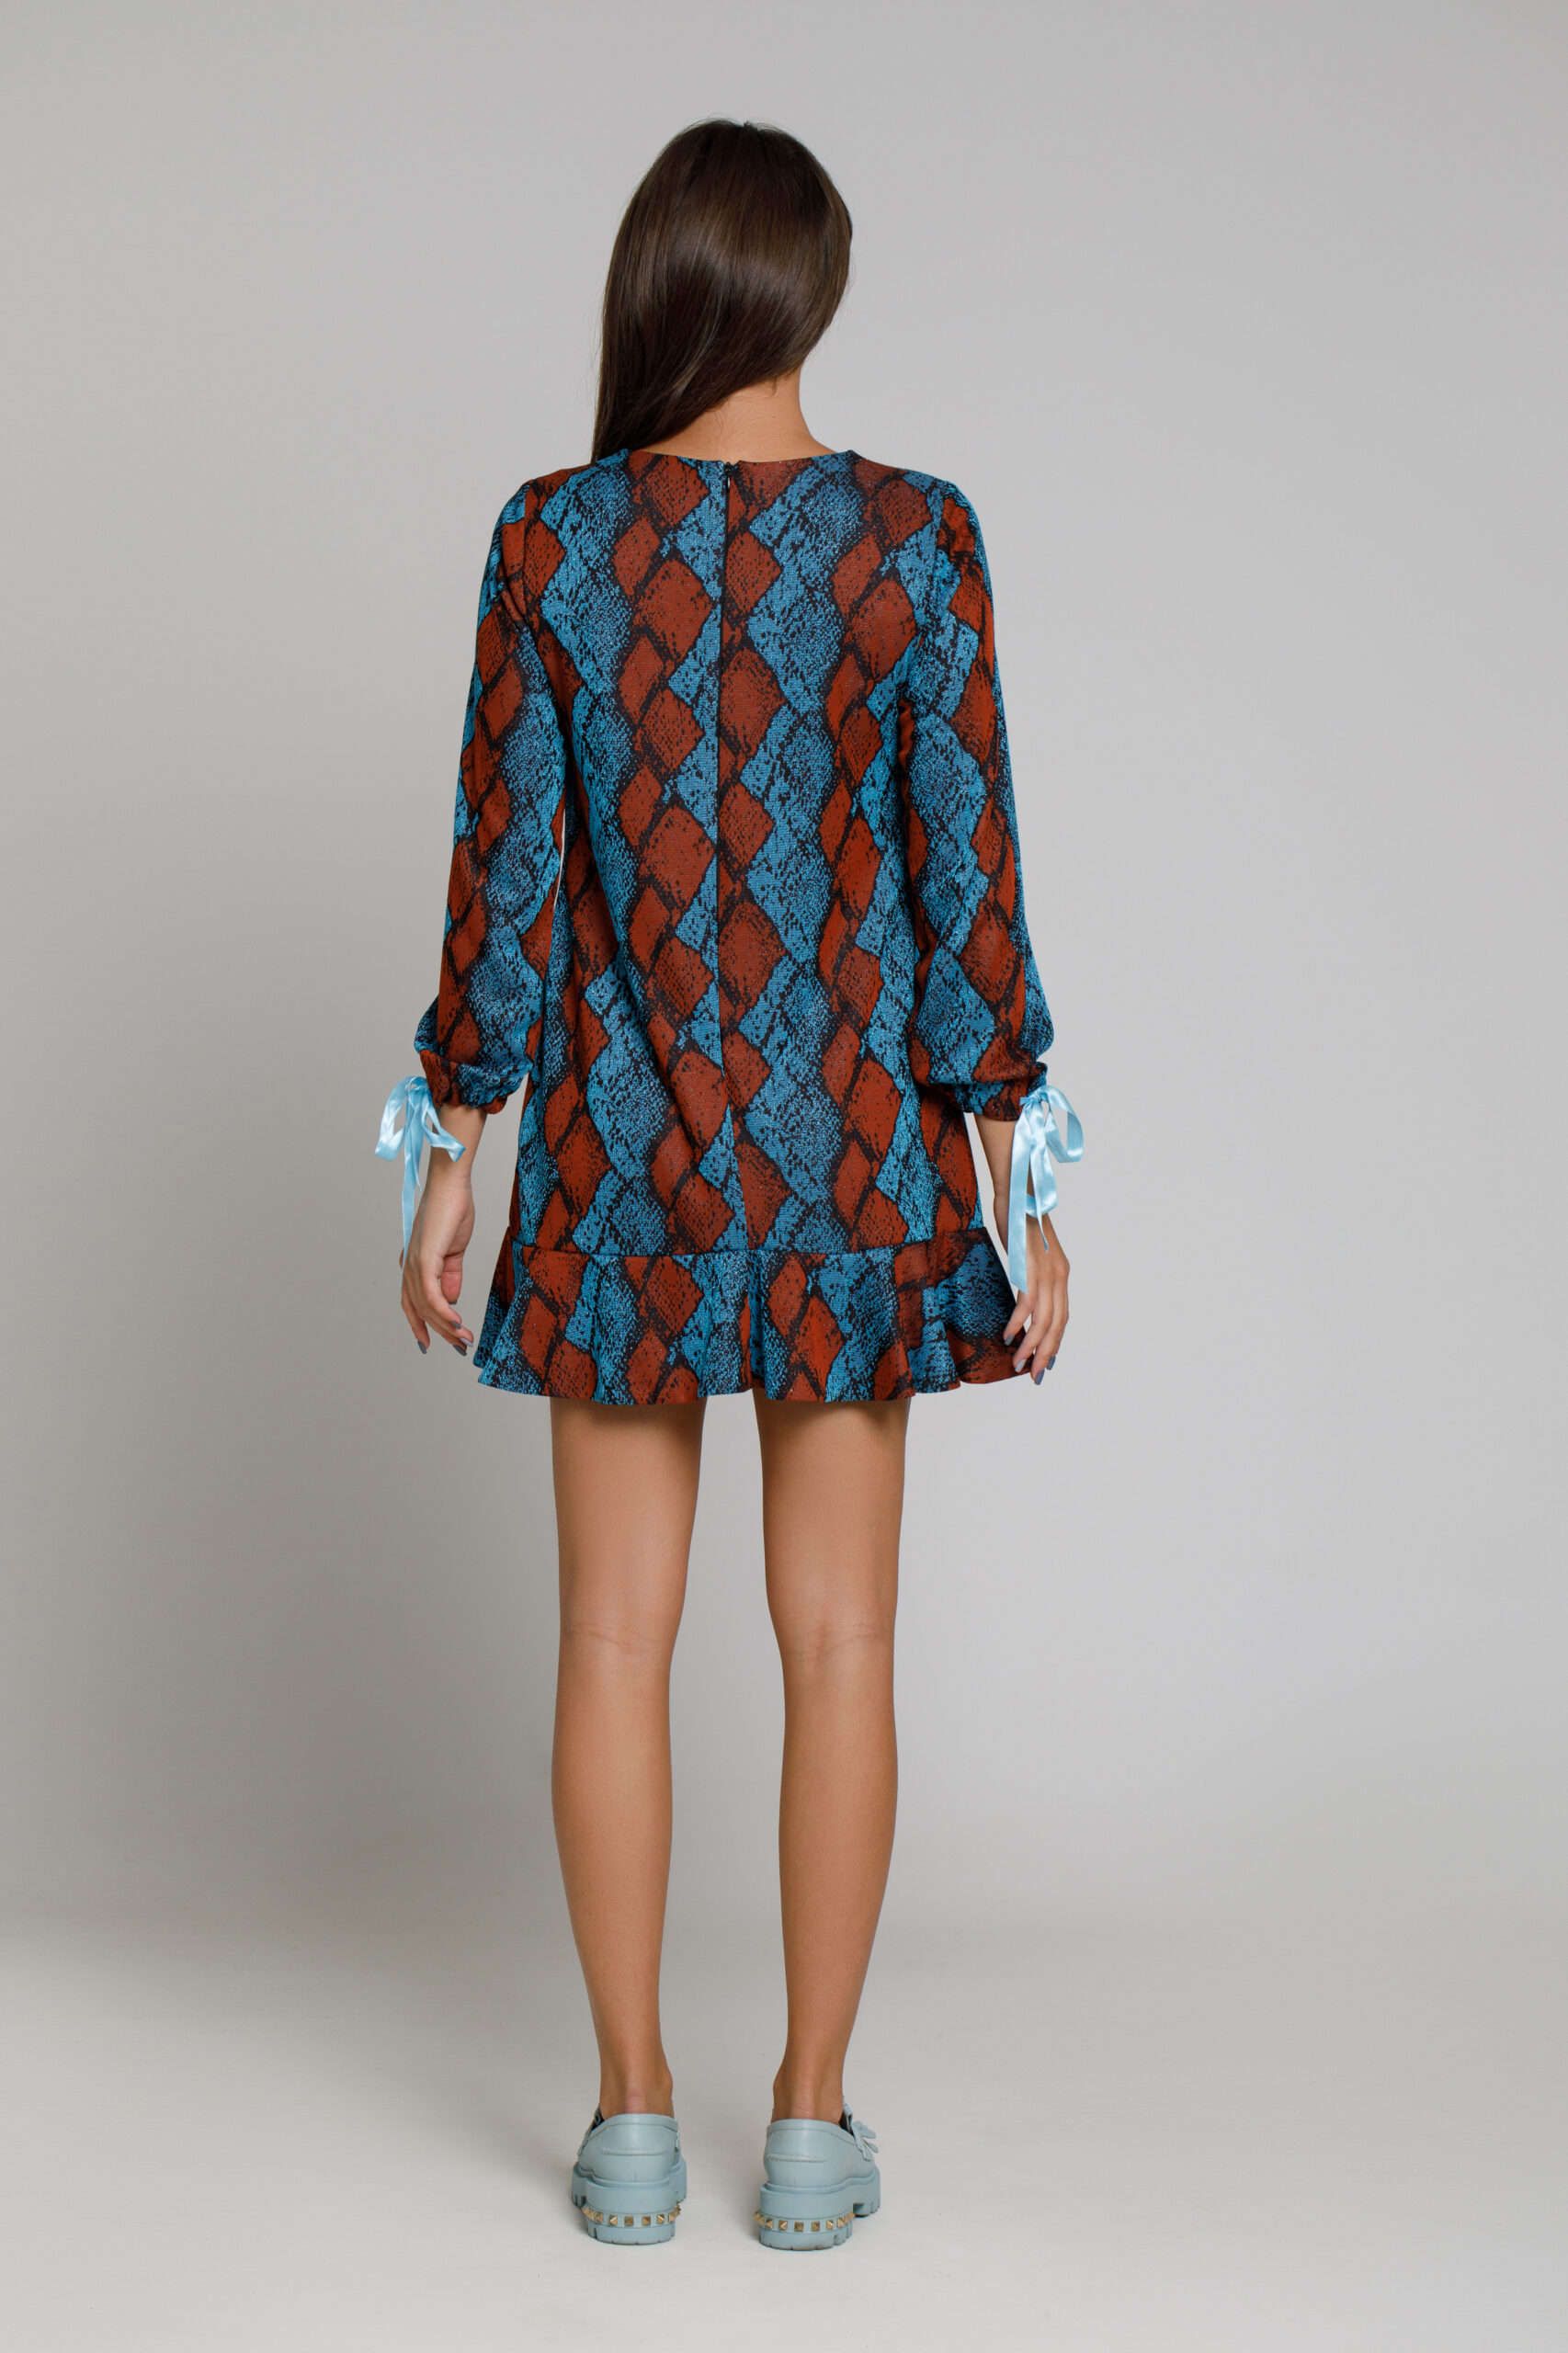 RUELLE jersey dress with brick frills. Natural fabrics, original design, handmade embroidery